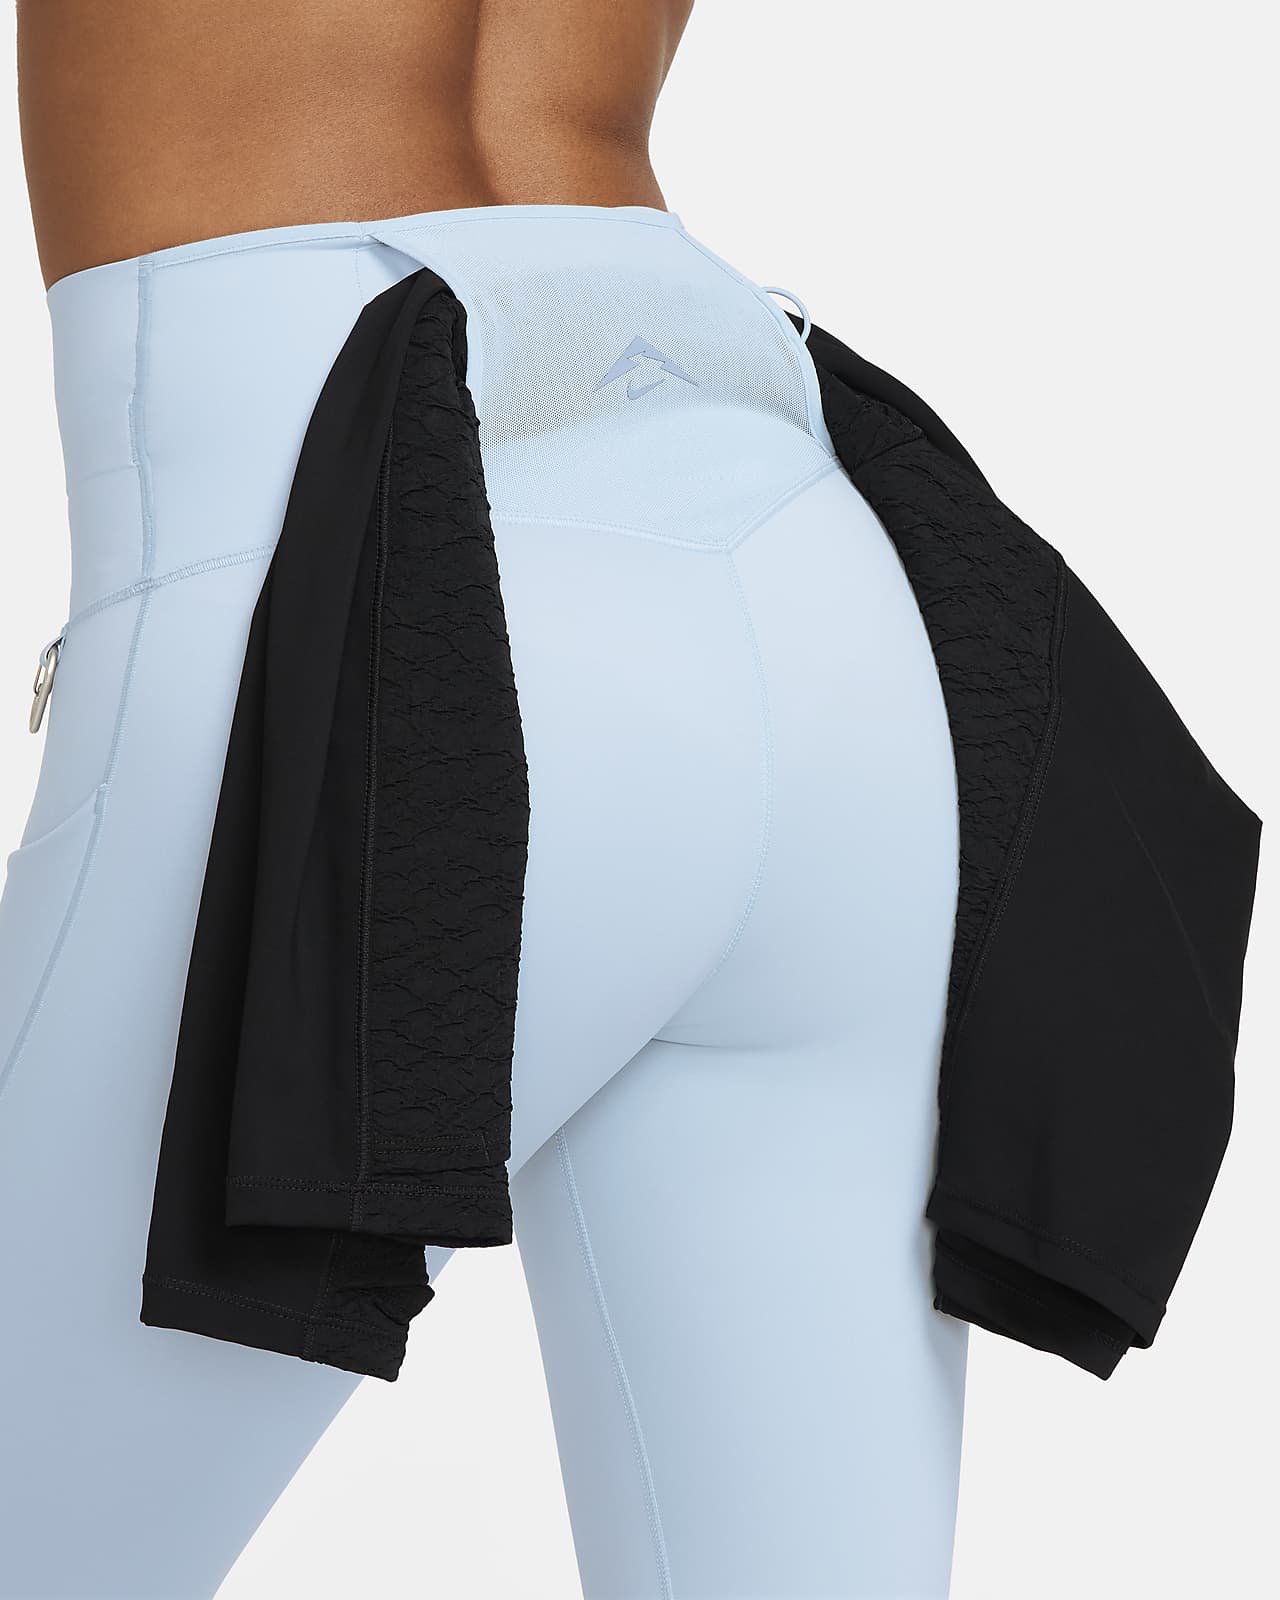 Nike Skin Women's Activewear Textured Leggings Blue Black Size S 0, Lo -  Shop Linda's Stuff